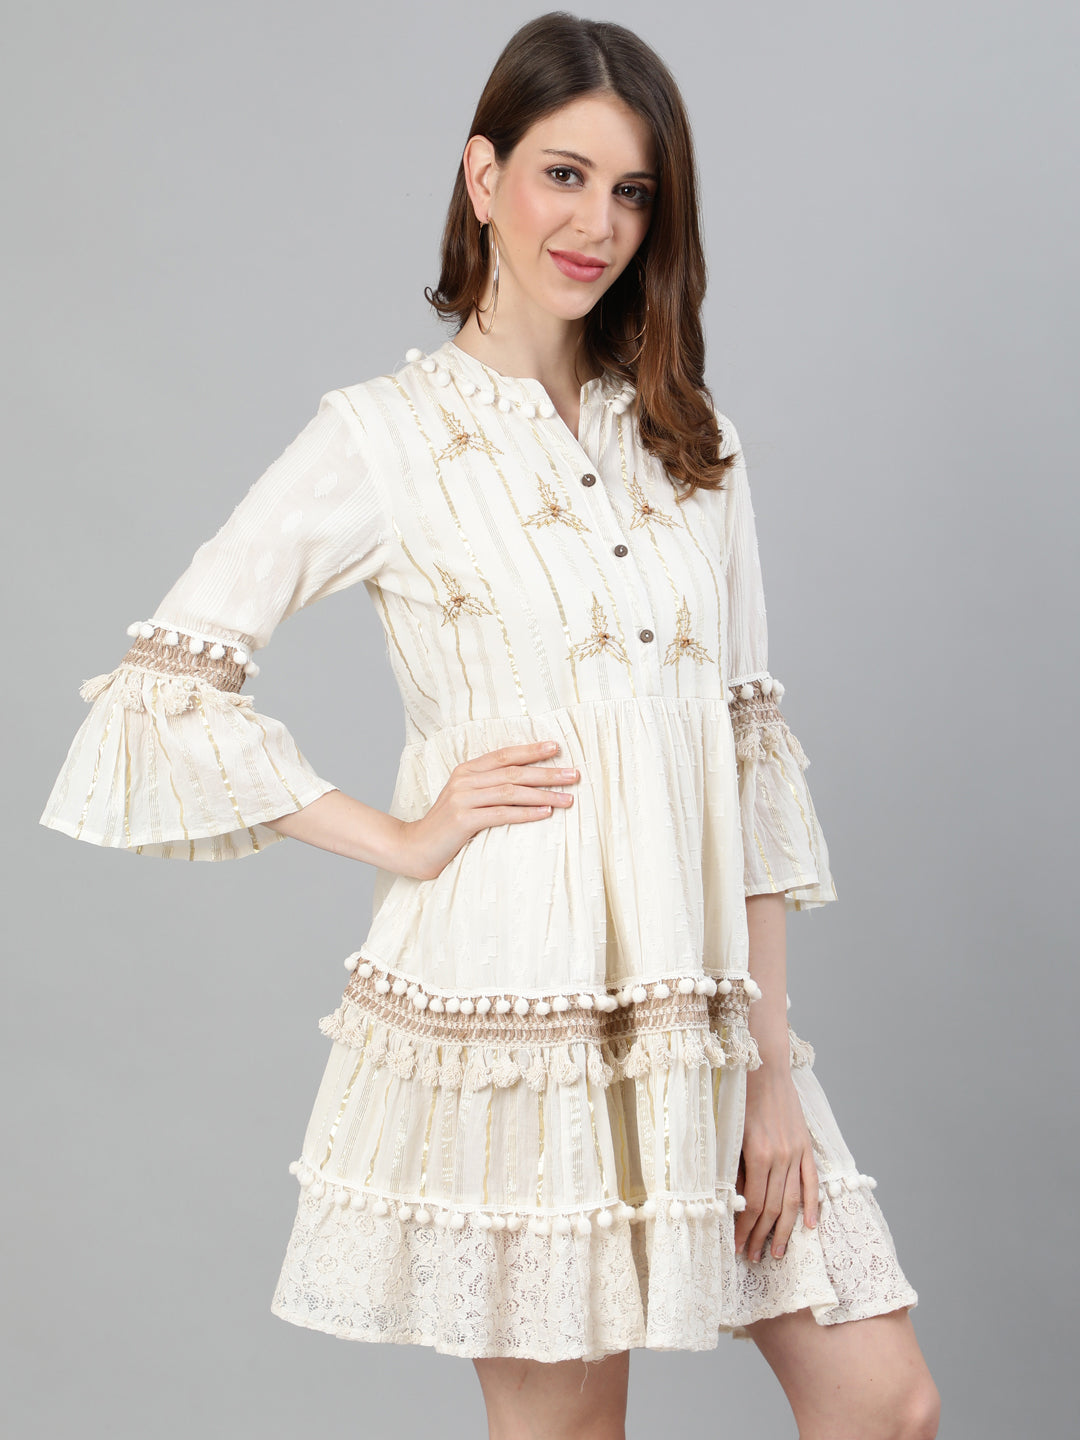 Ishin Women's Cotton Off White Lurex Embroidered A-Line Dress